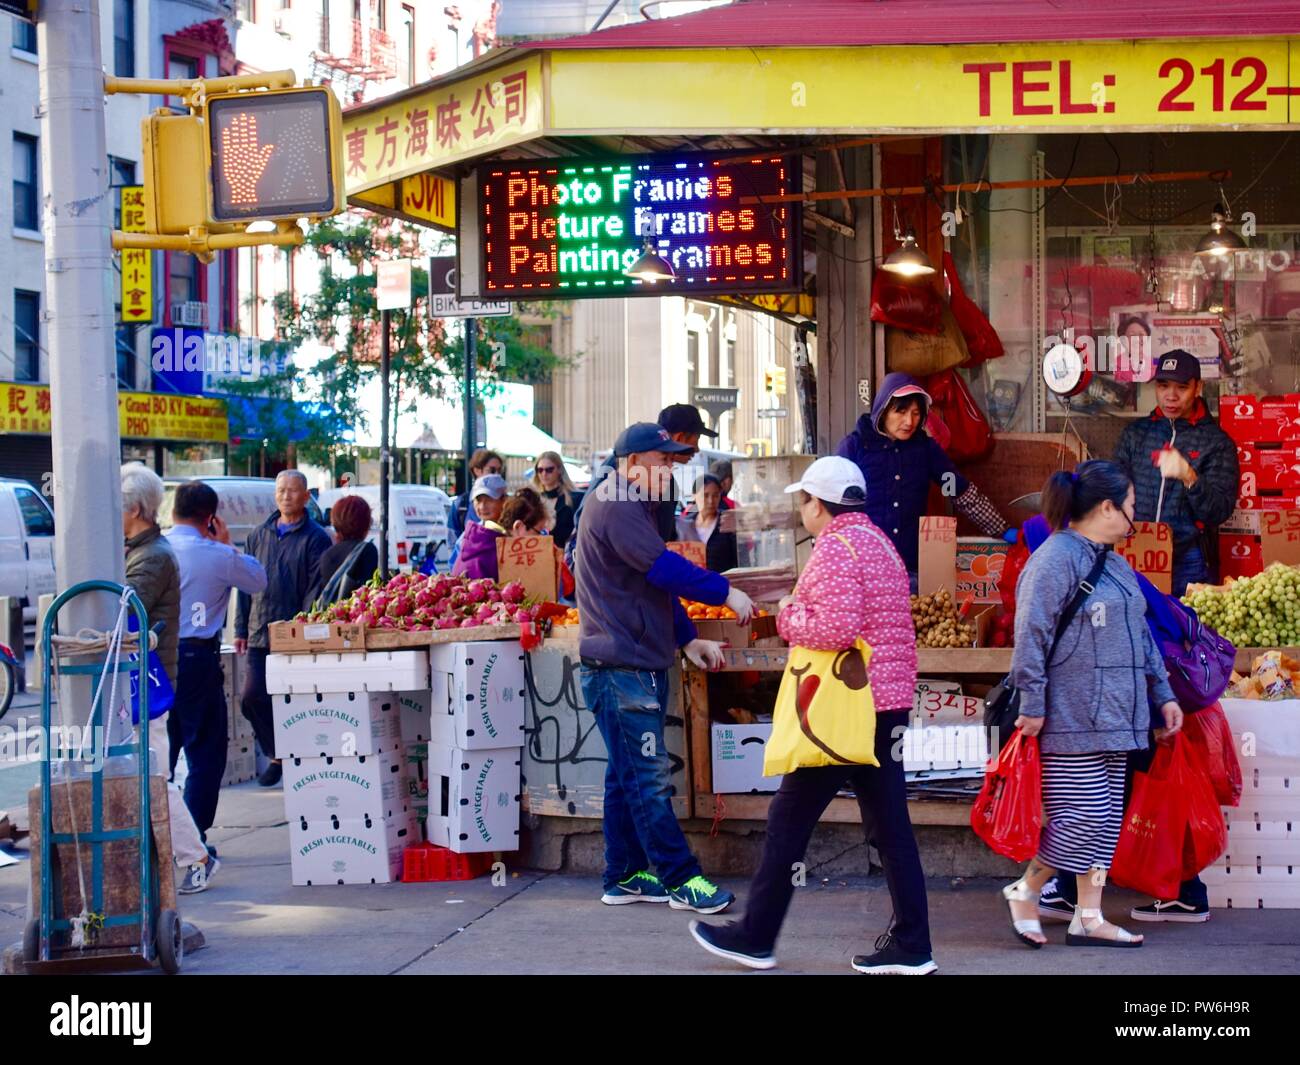 Asian shoppers outside vegetable, fruit market on corner of Mott Street in Chinatown, New York, NY, USA. Stock Photo